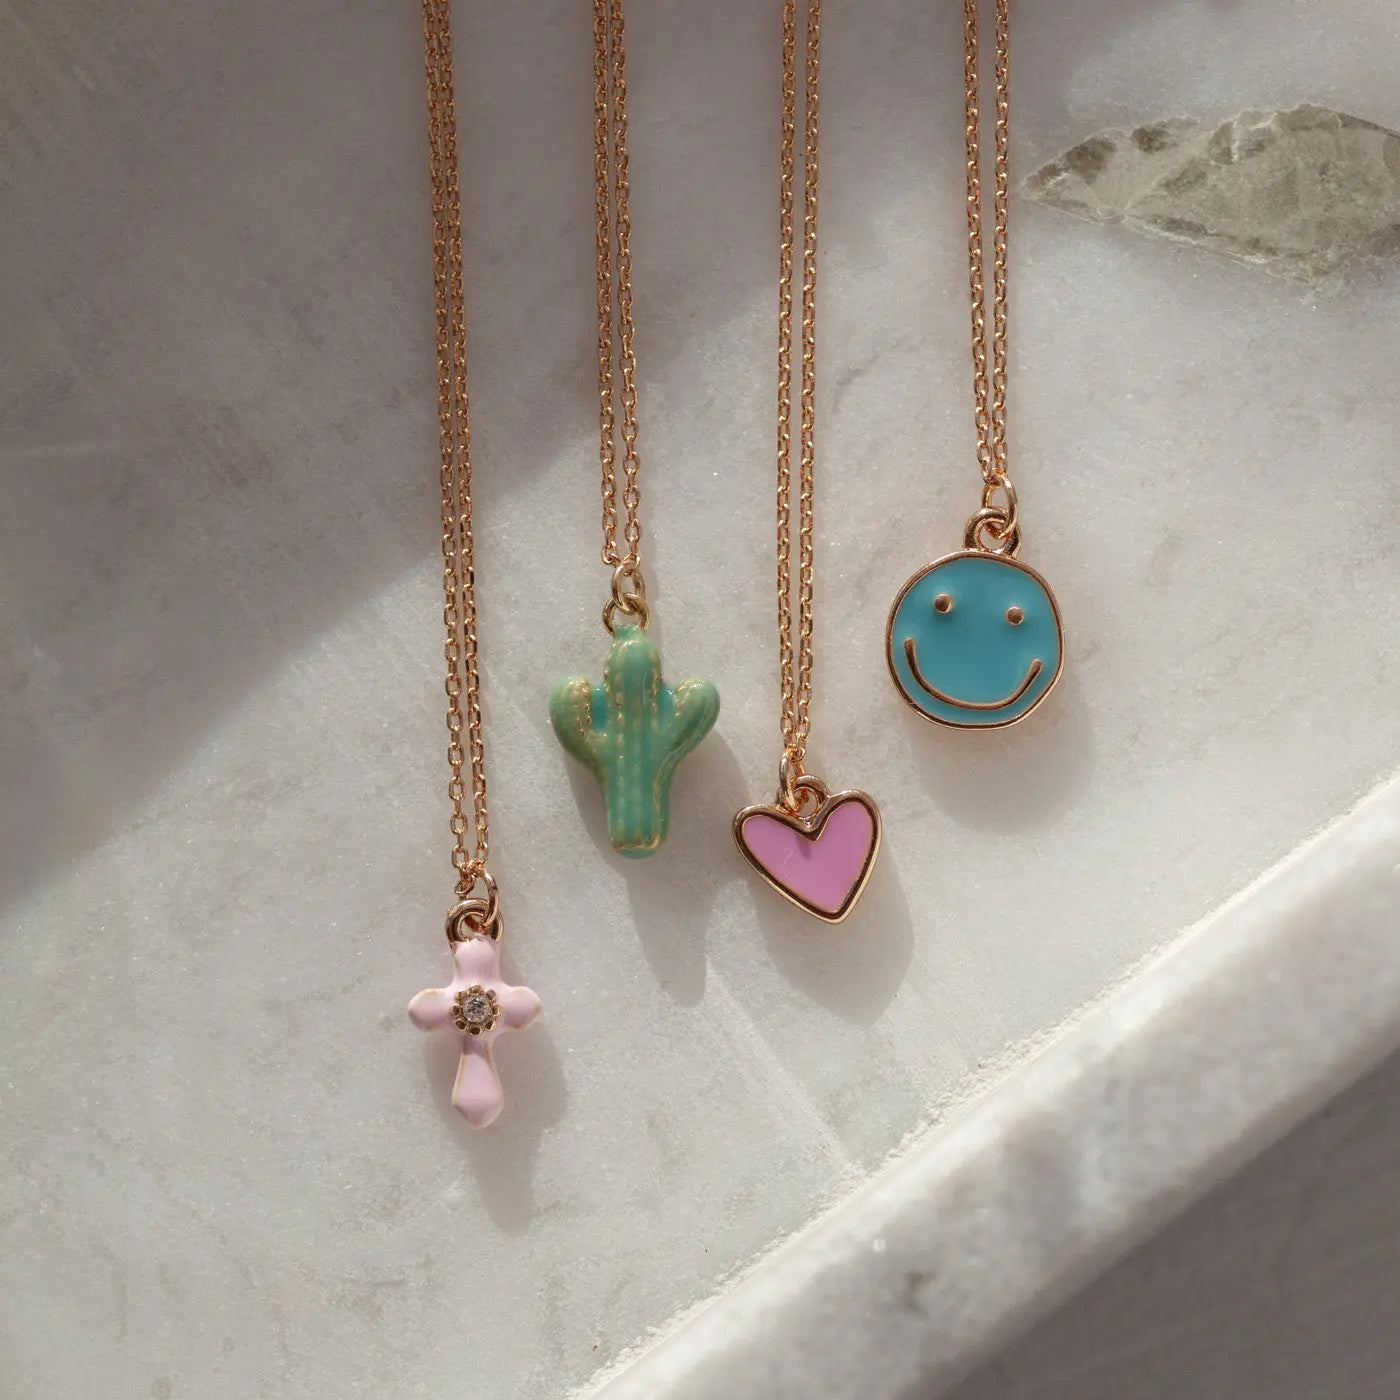 Doris - Pink Heart Enamel Necklace